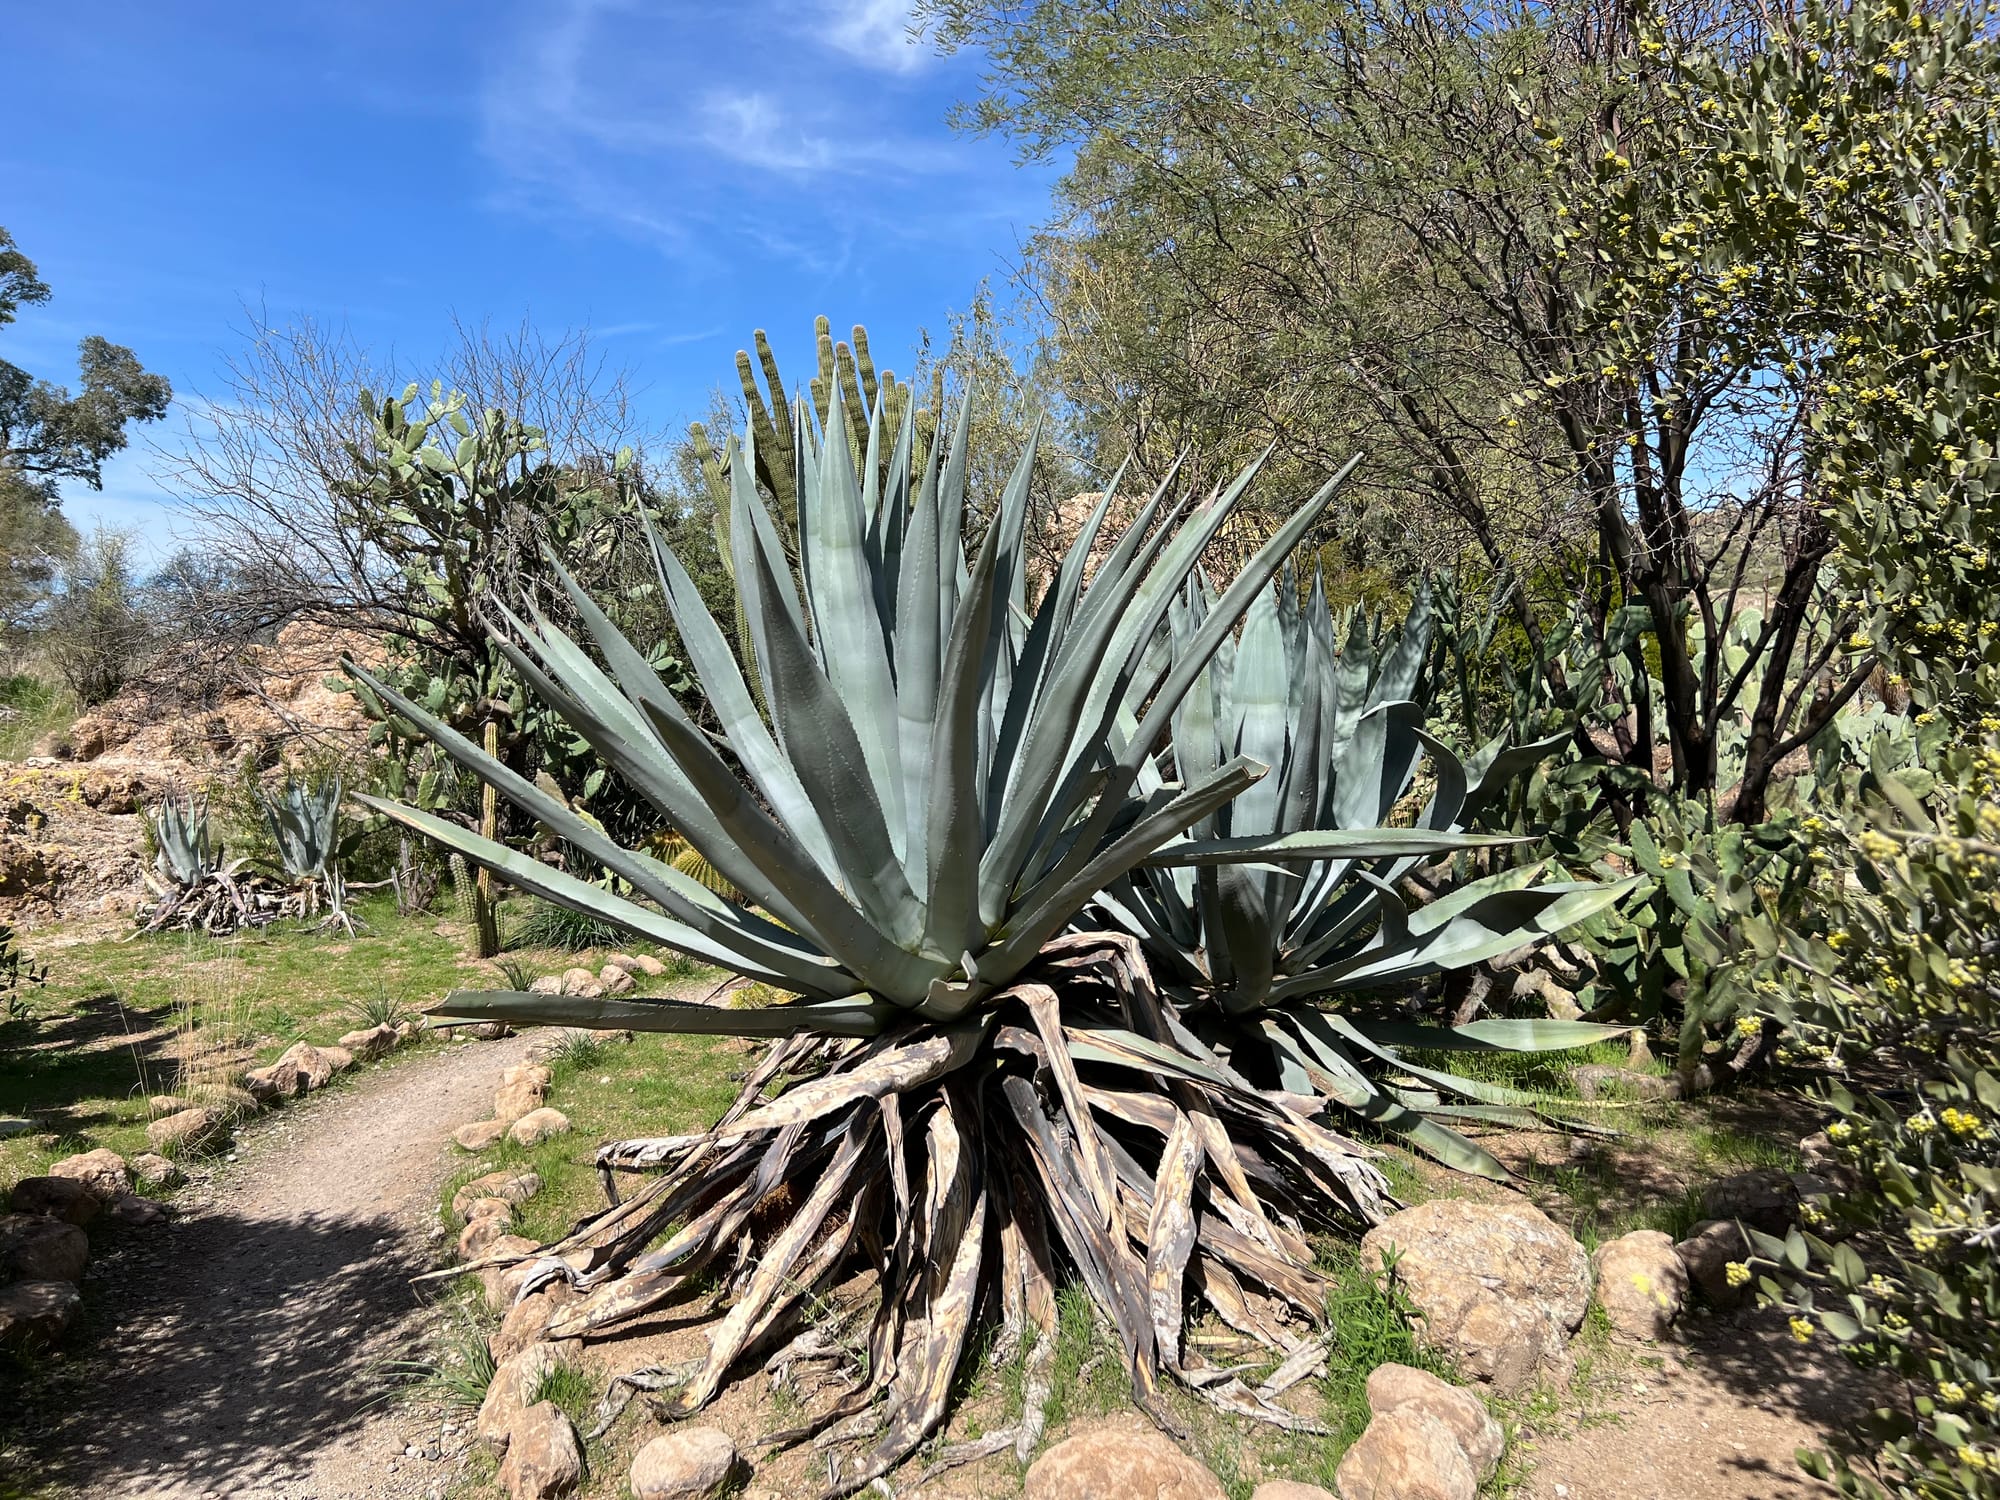 A Day At The Boyce Thompson Arboretum, Arizona